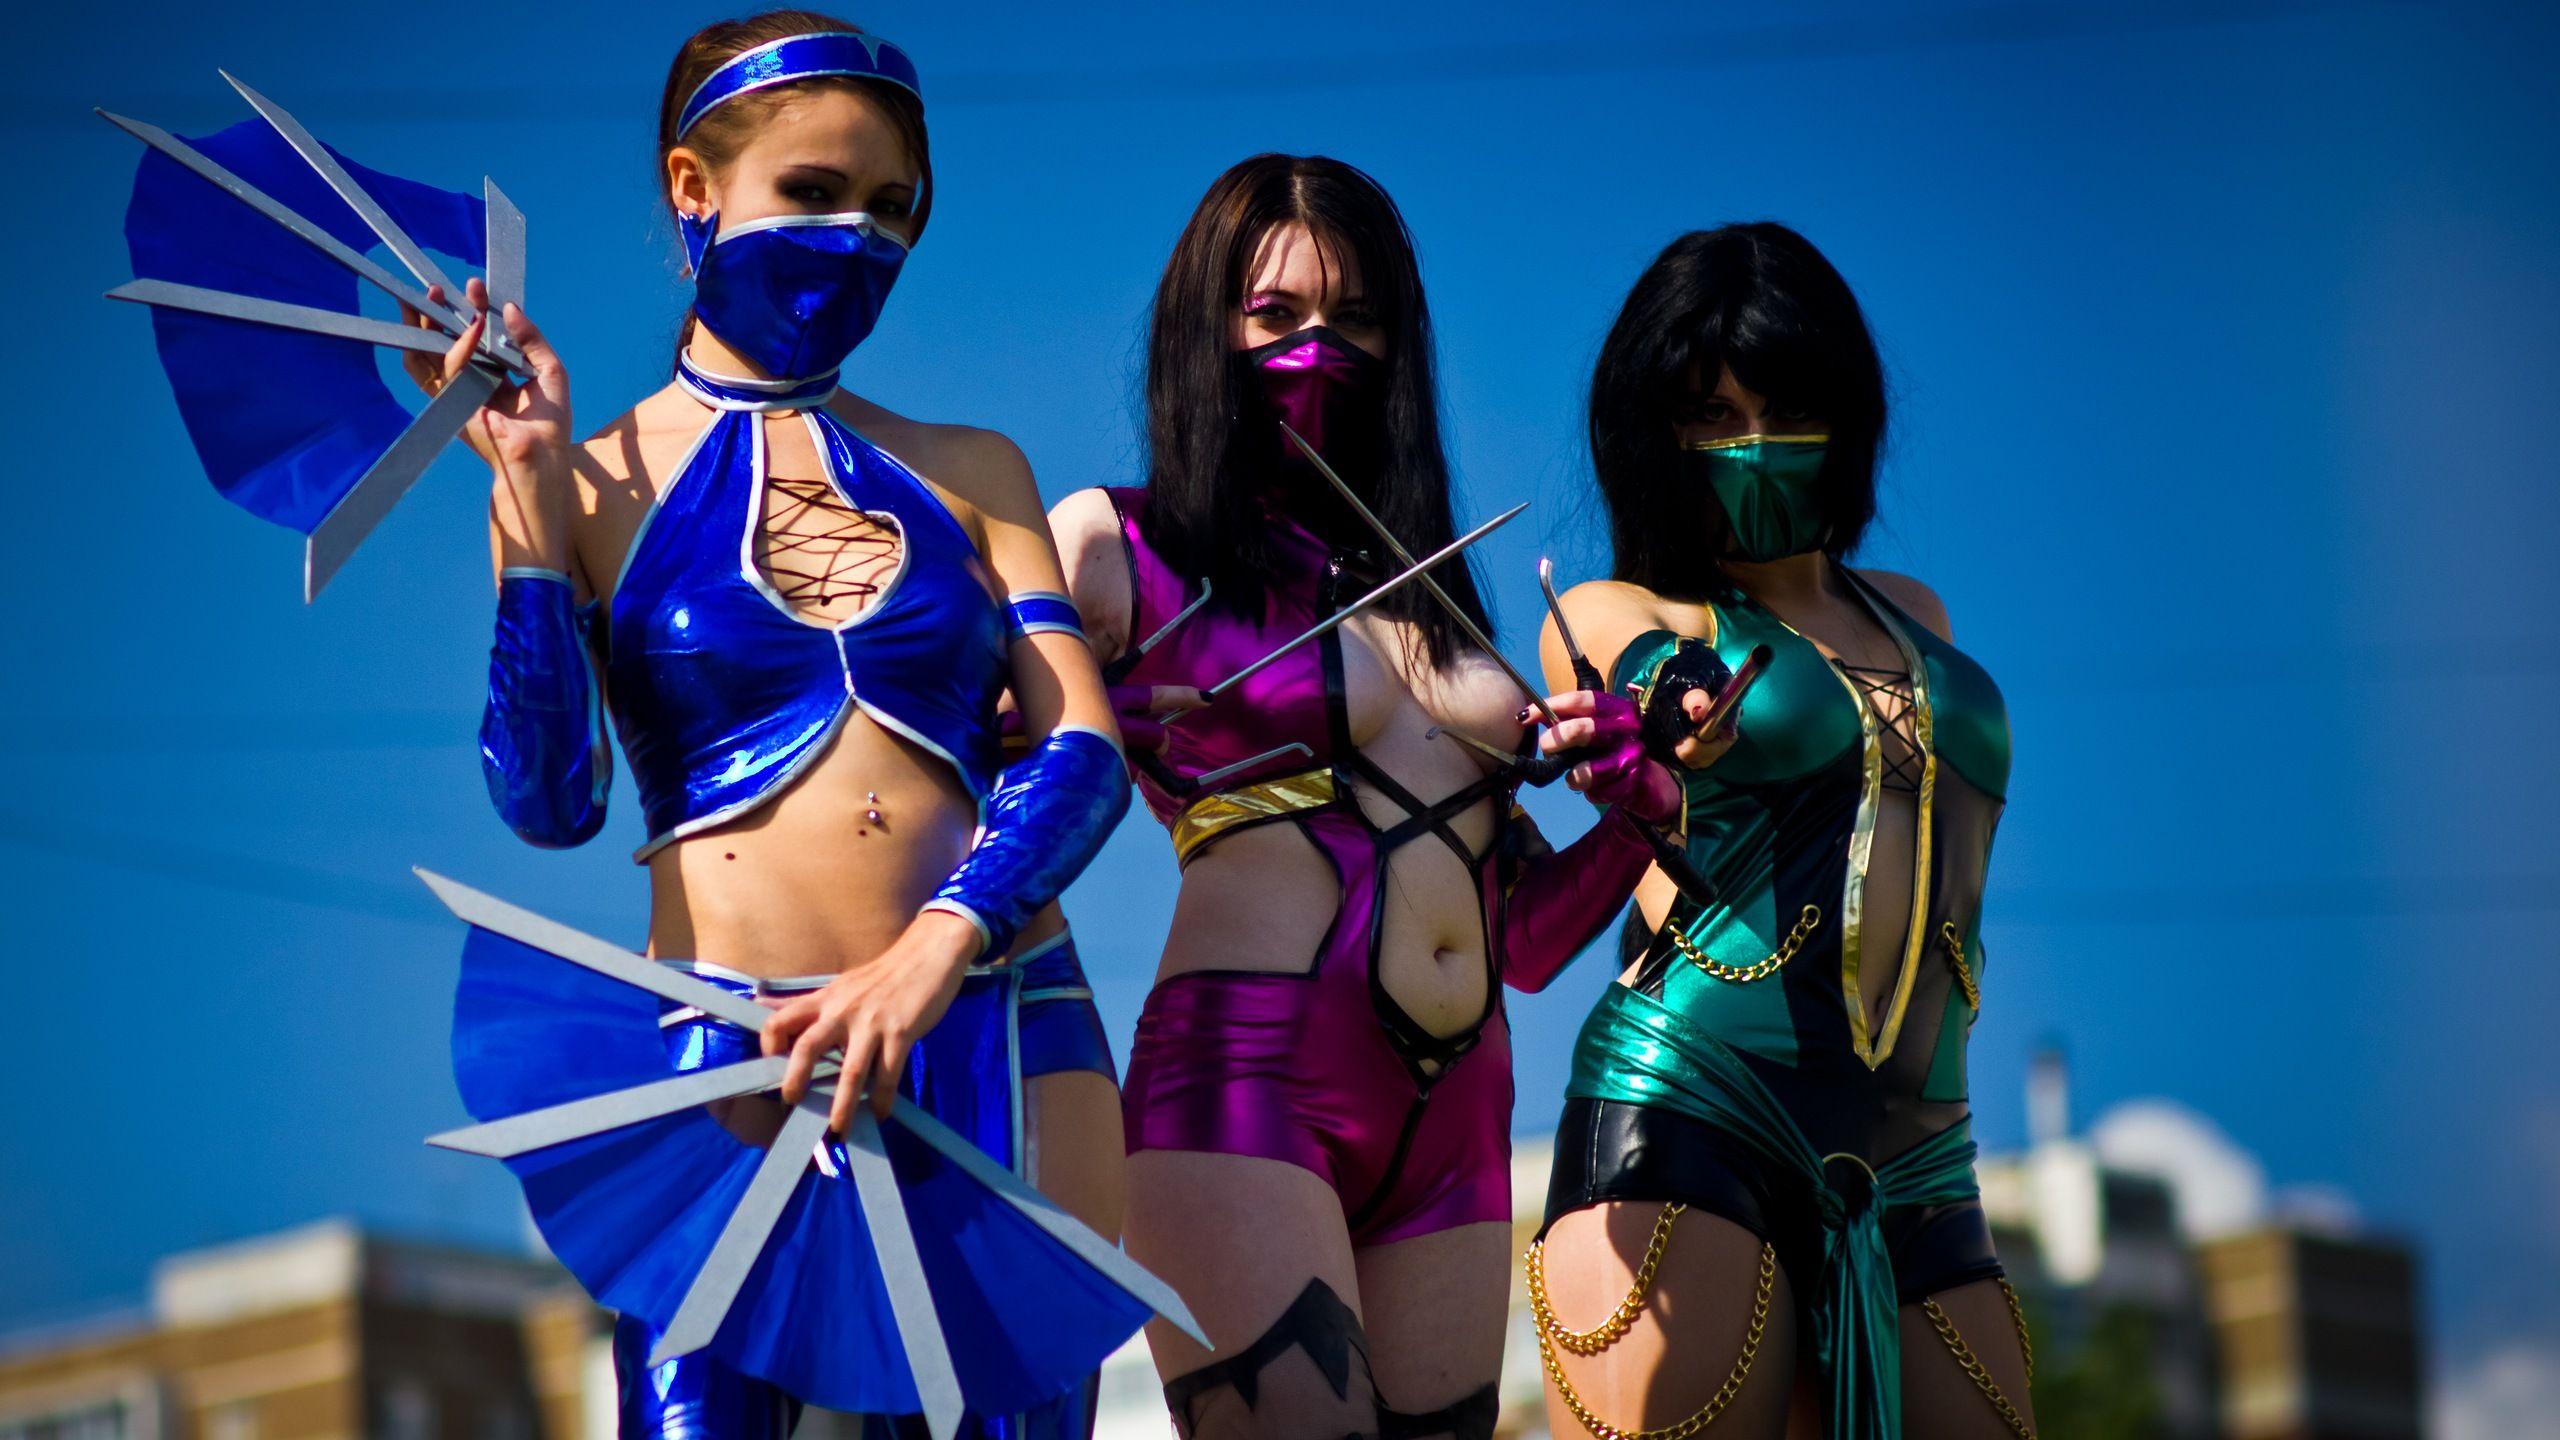 Wallpaper of Kitana, Mileena & Jade cosplay from Mortal Kombat